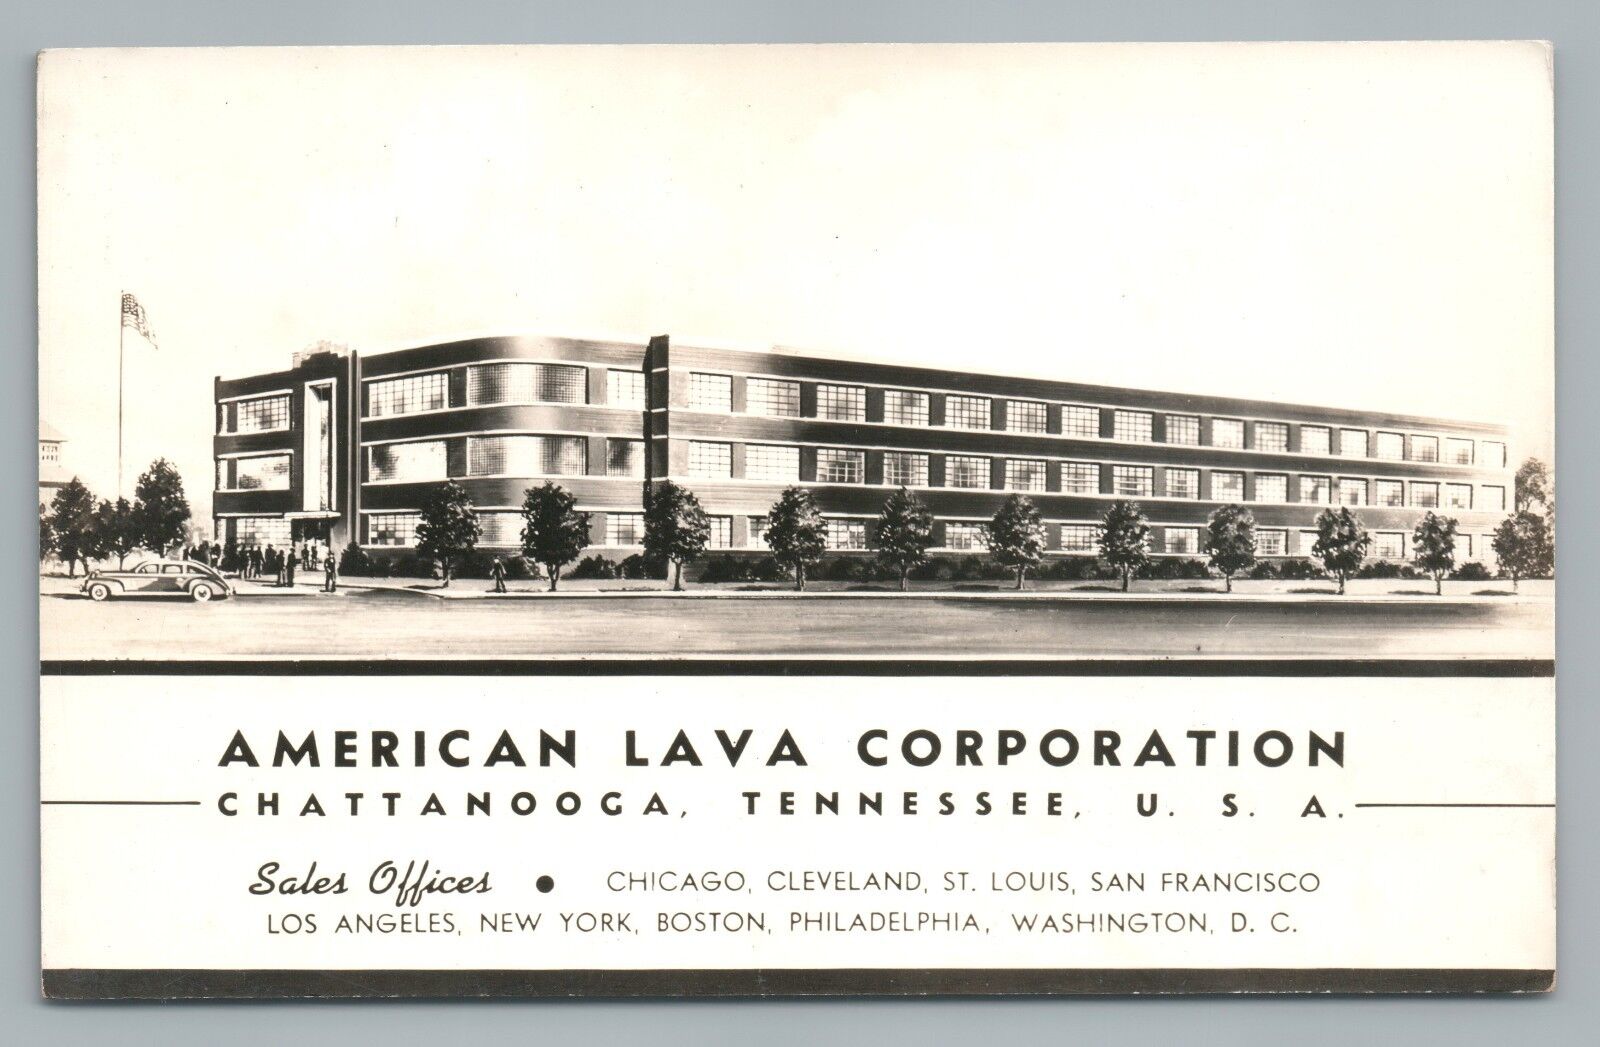 American Lava Corporation CHATTANOOGA Rare RPPC Art-Deco Advertising Cline Photo